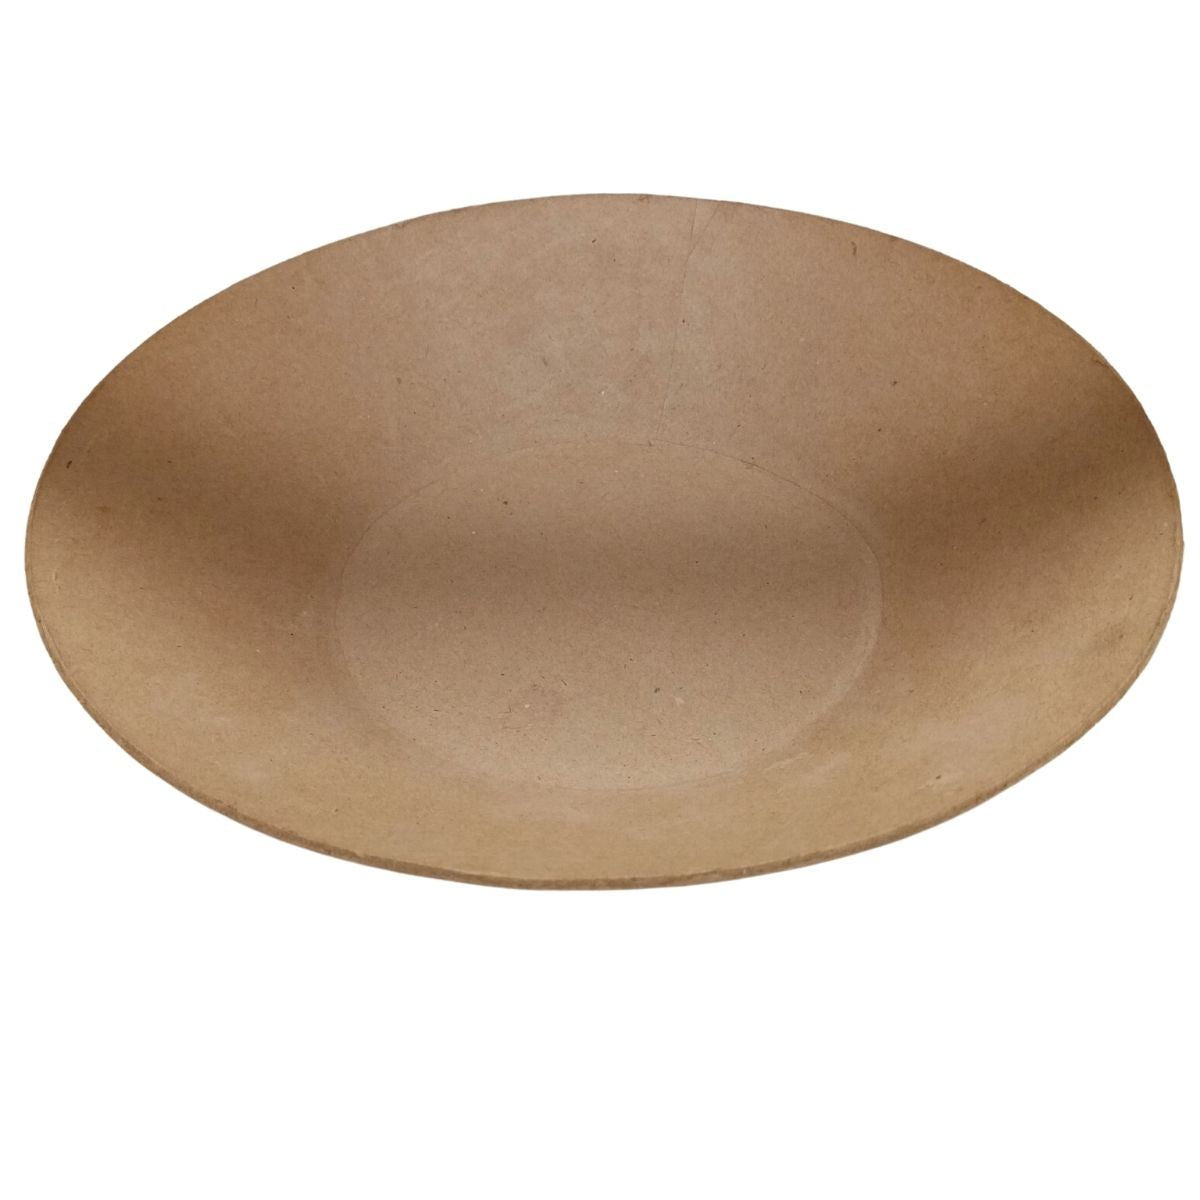 Base - Cardboard Round Dish - 25cm x 5cm